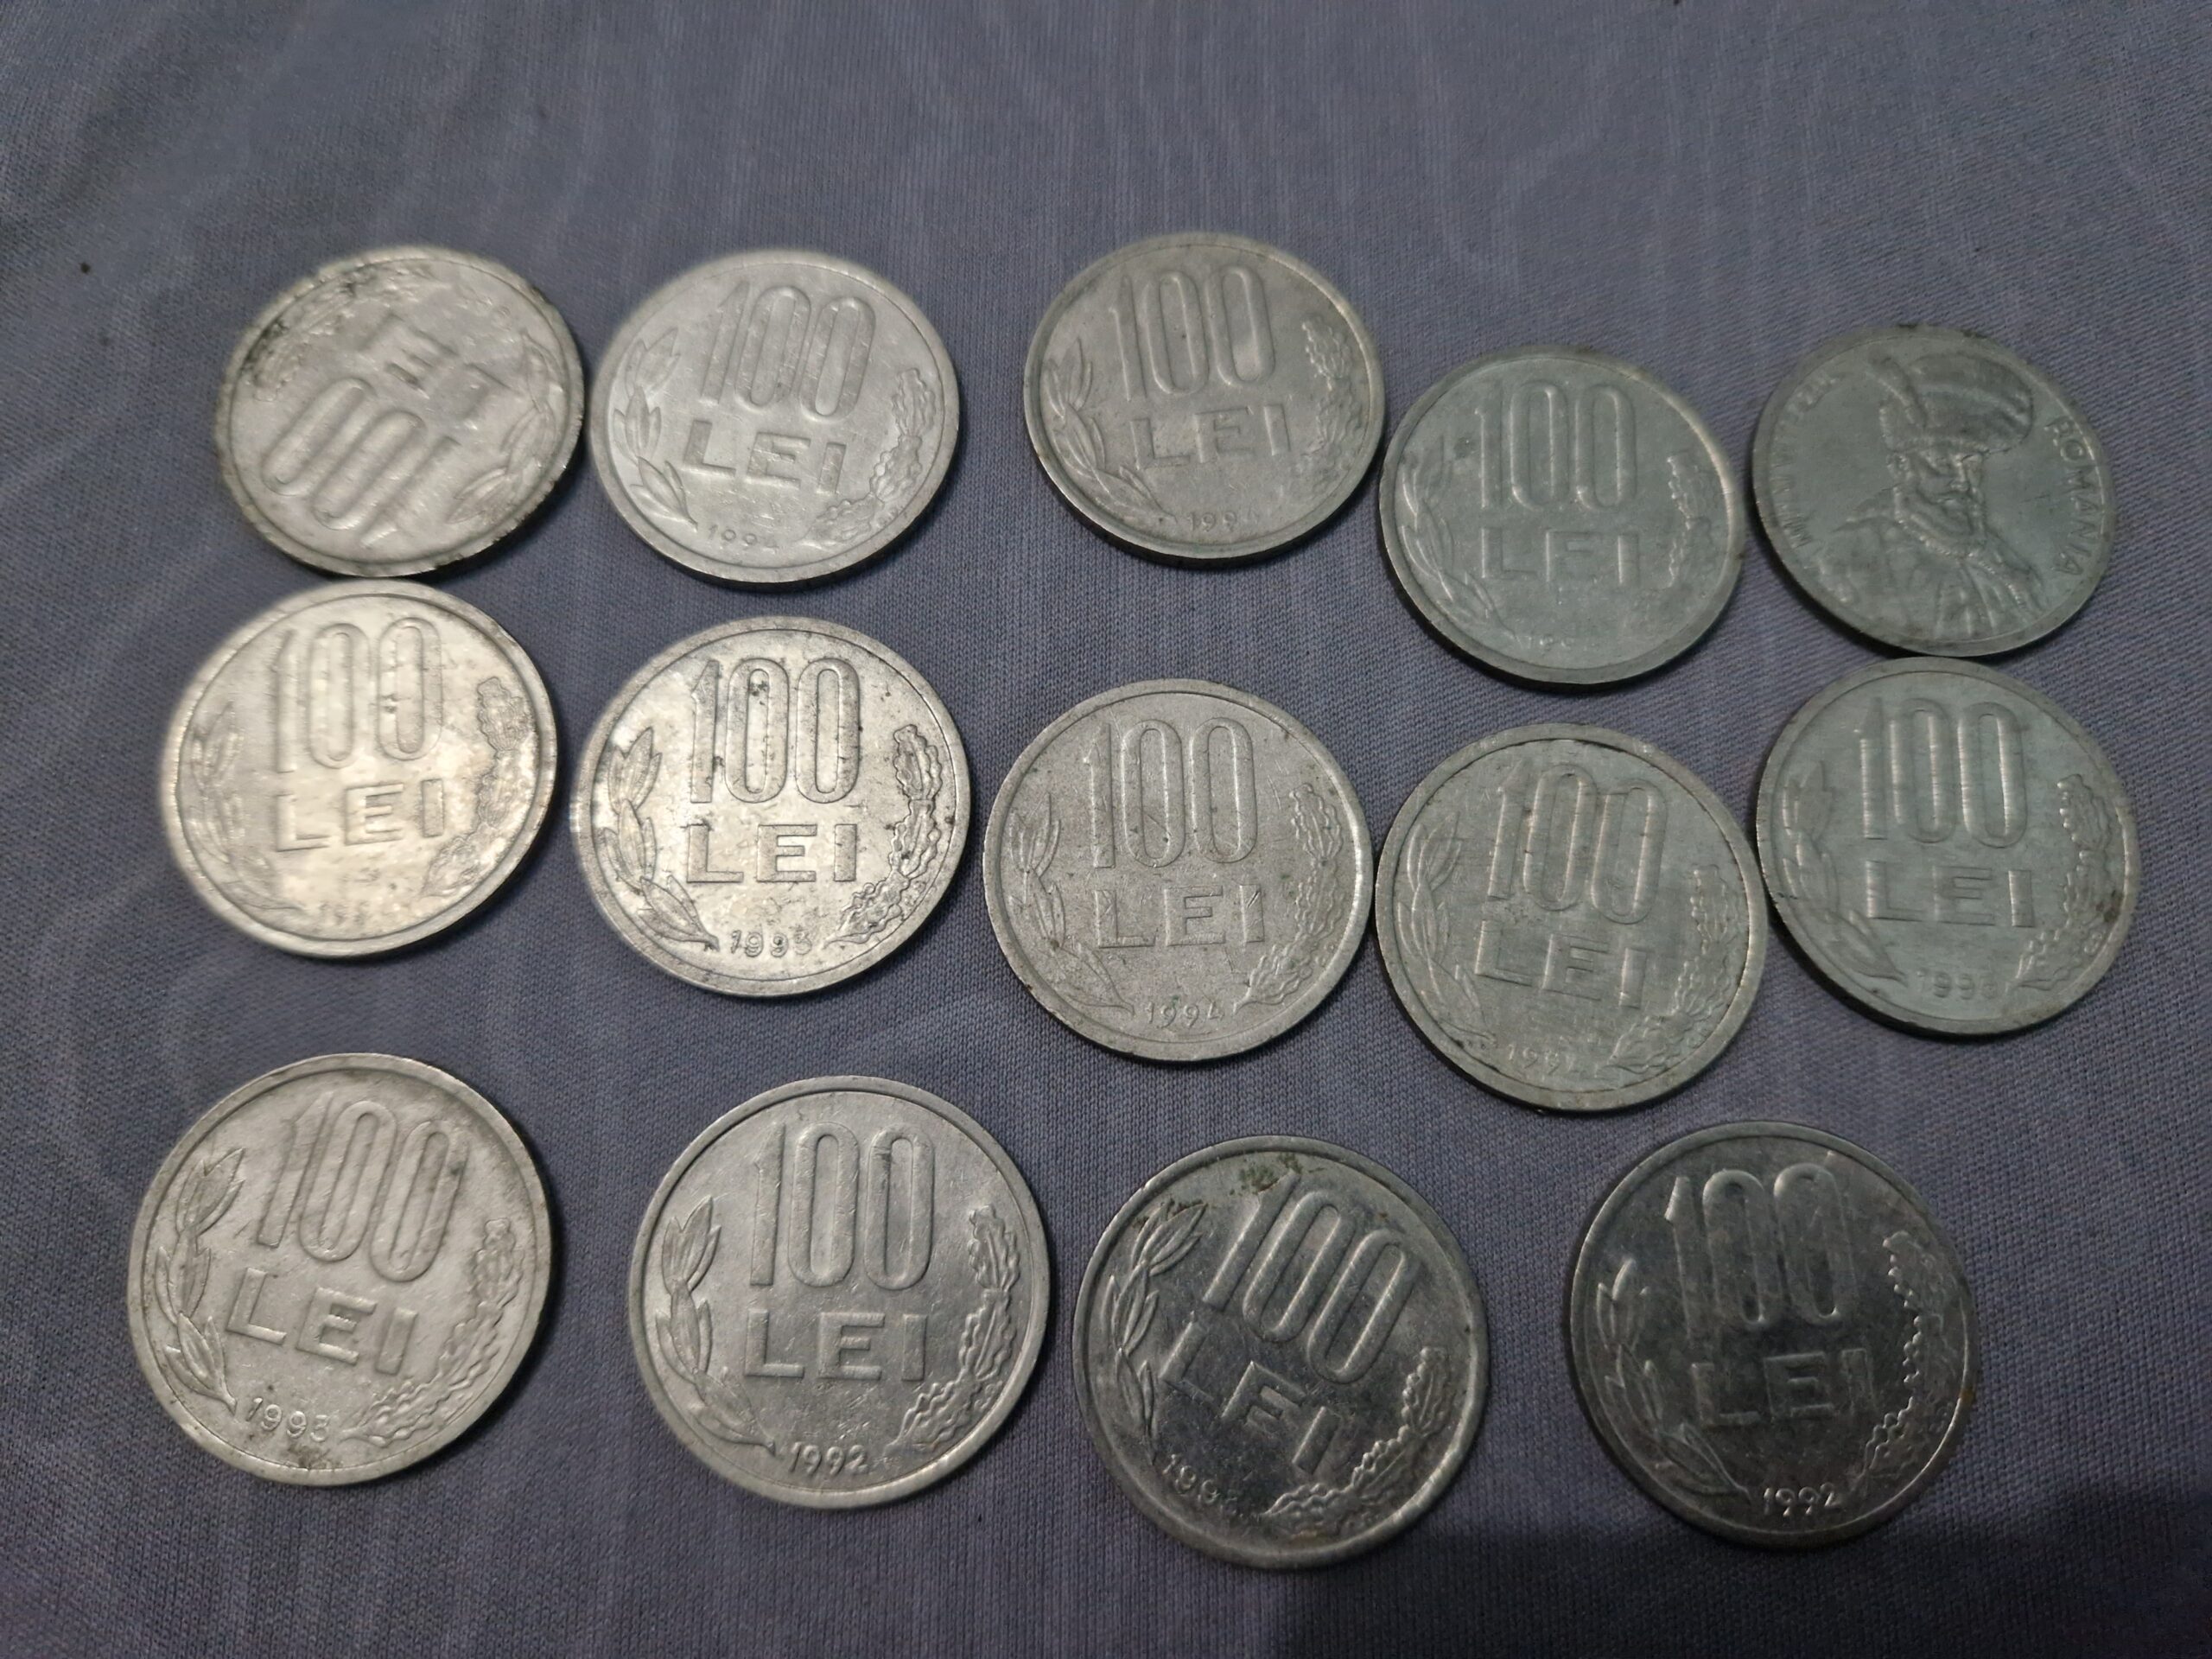 Monede vechi, 1900-2000